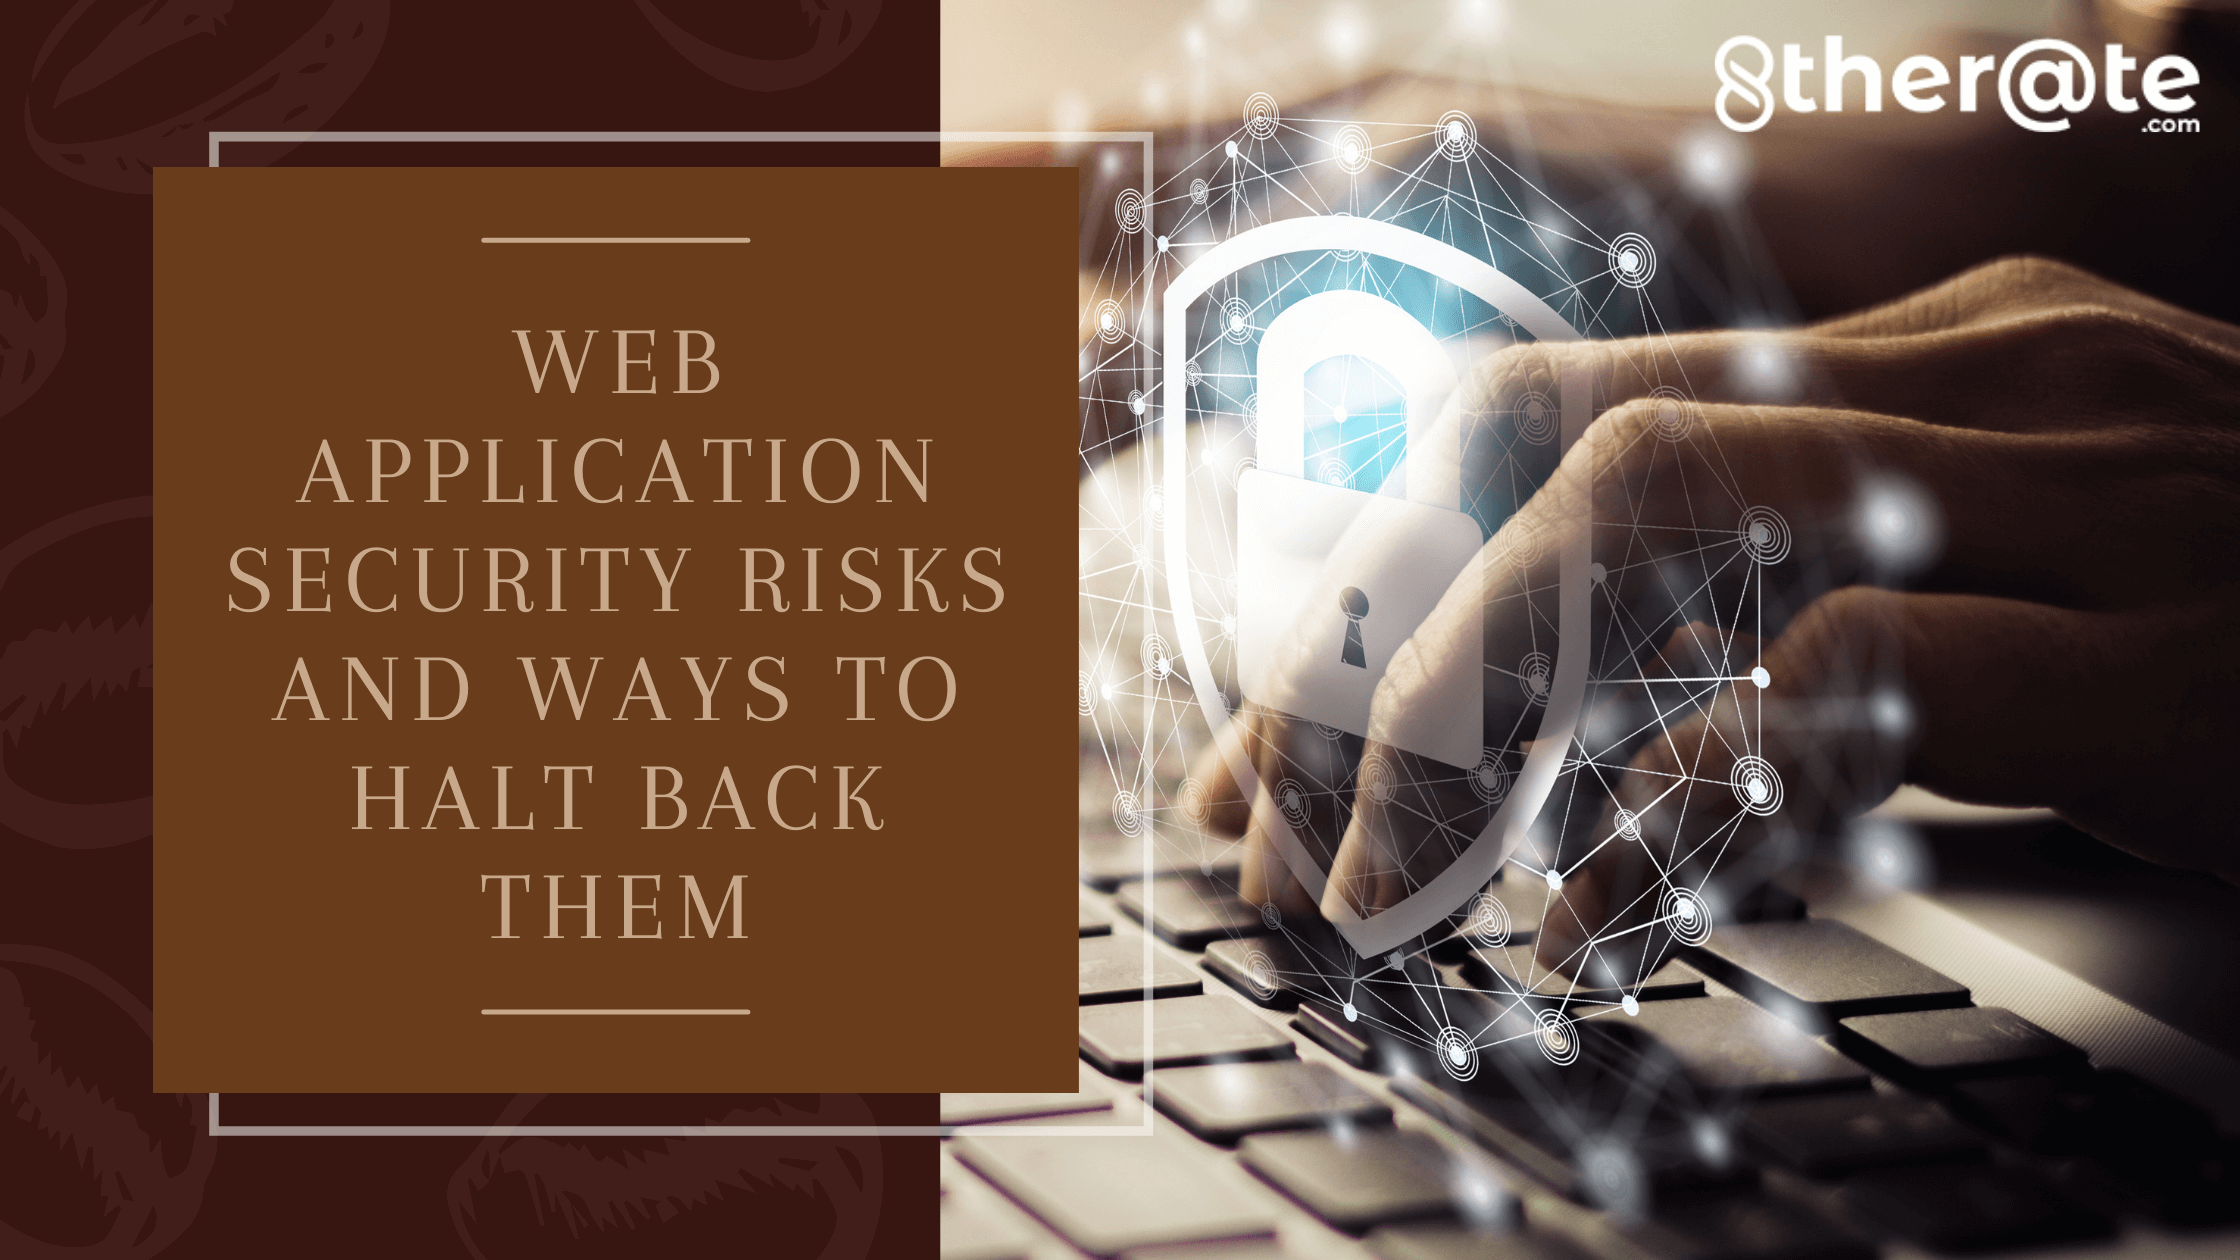 Web application security risks and ways to halt back them-0e13d19c